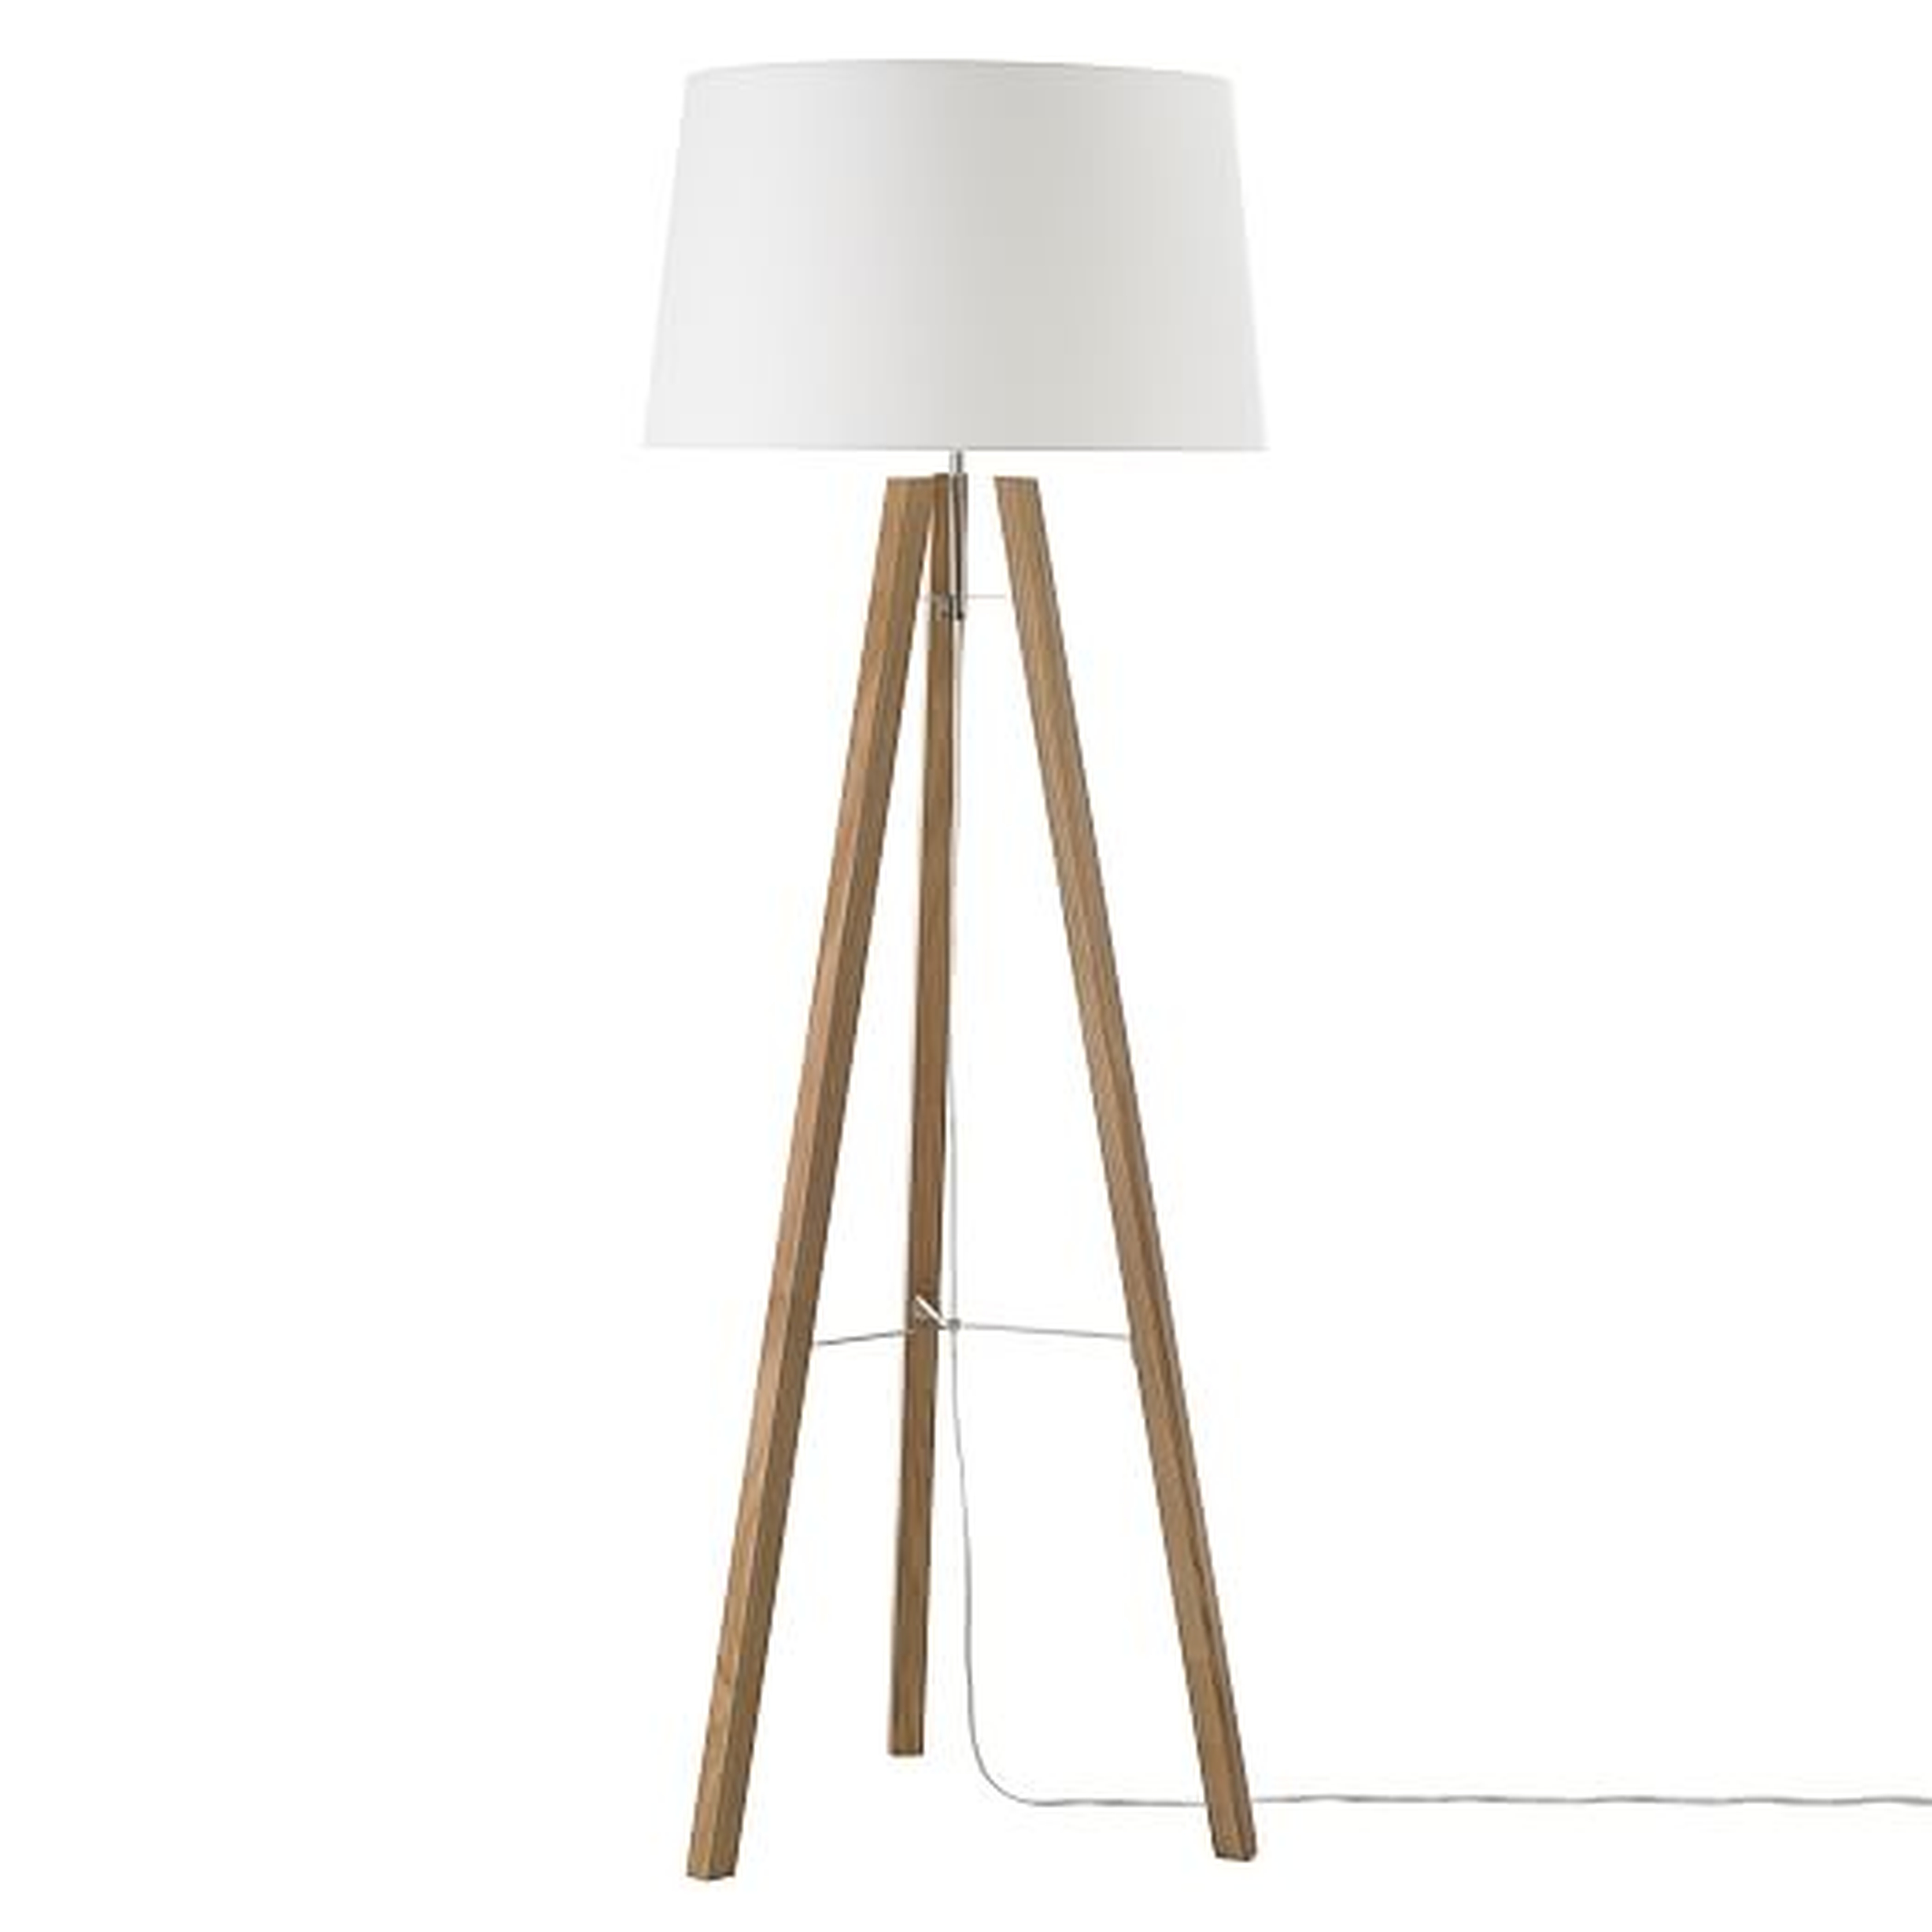 Tripod Wood Floor Lamp - West Elm